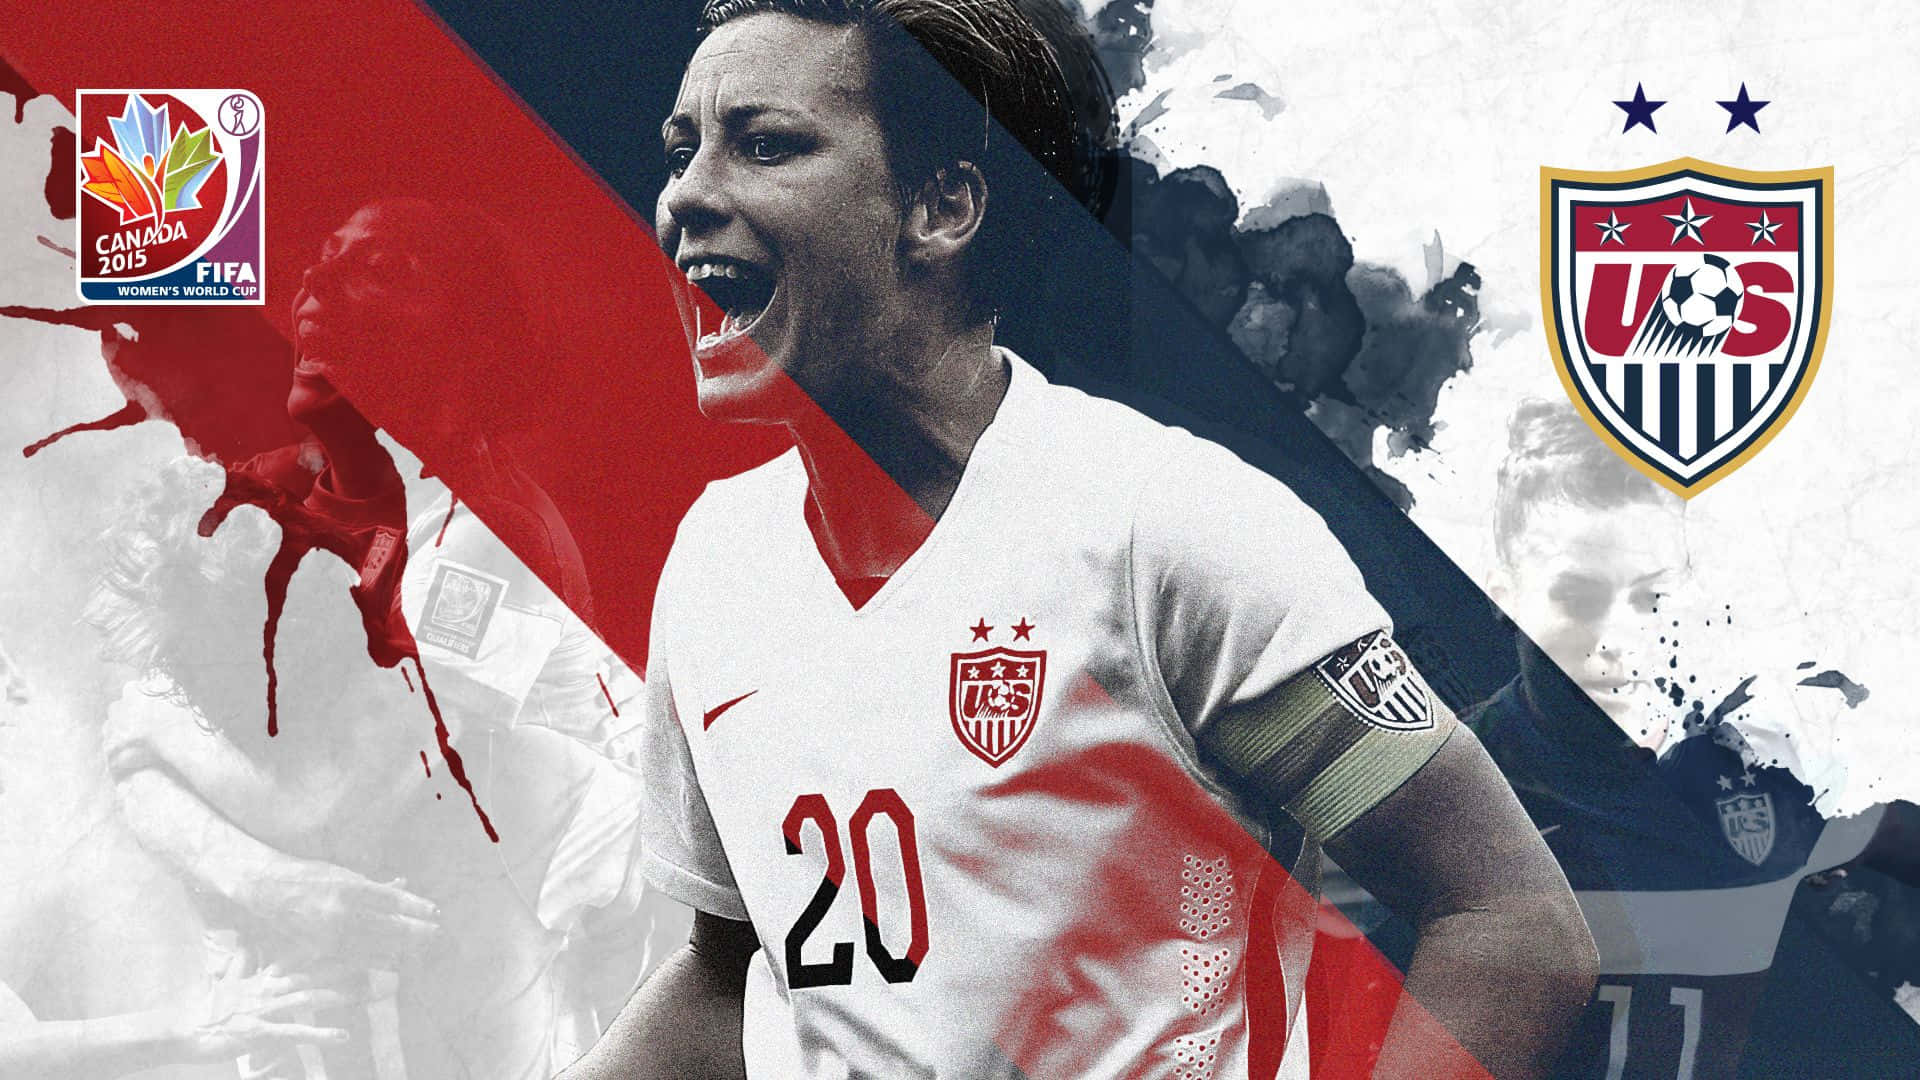 U S A Womens Soccer Player Canada2015 F I F A World Cup Wallpaper